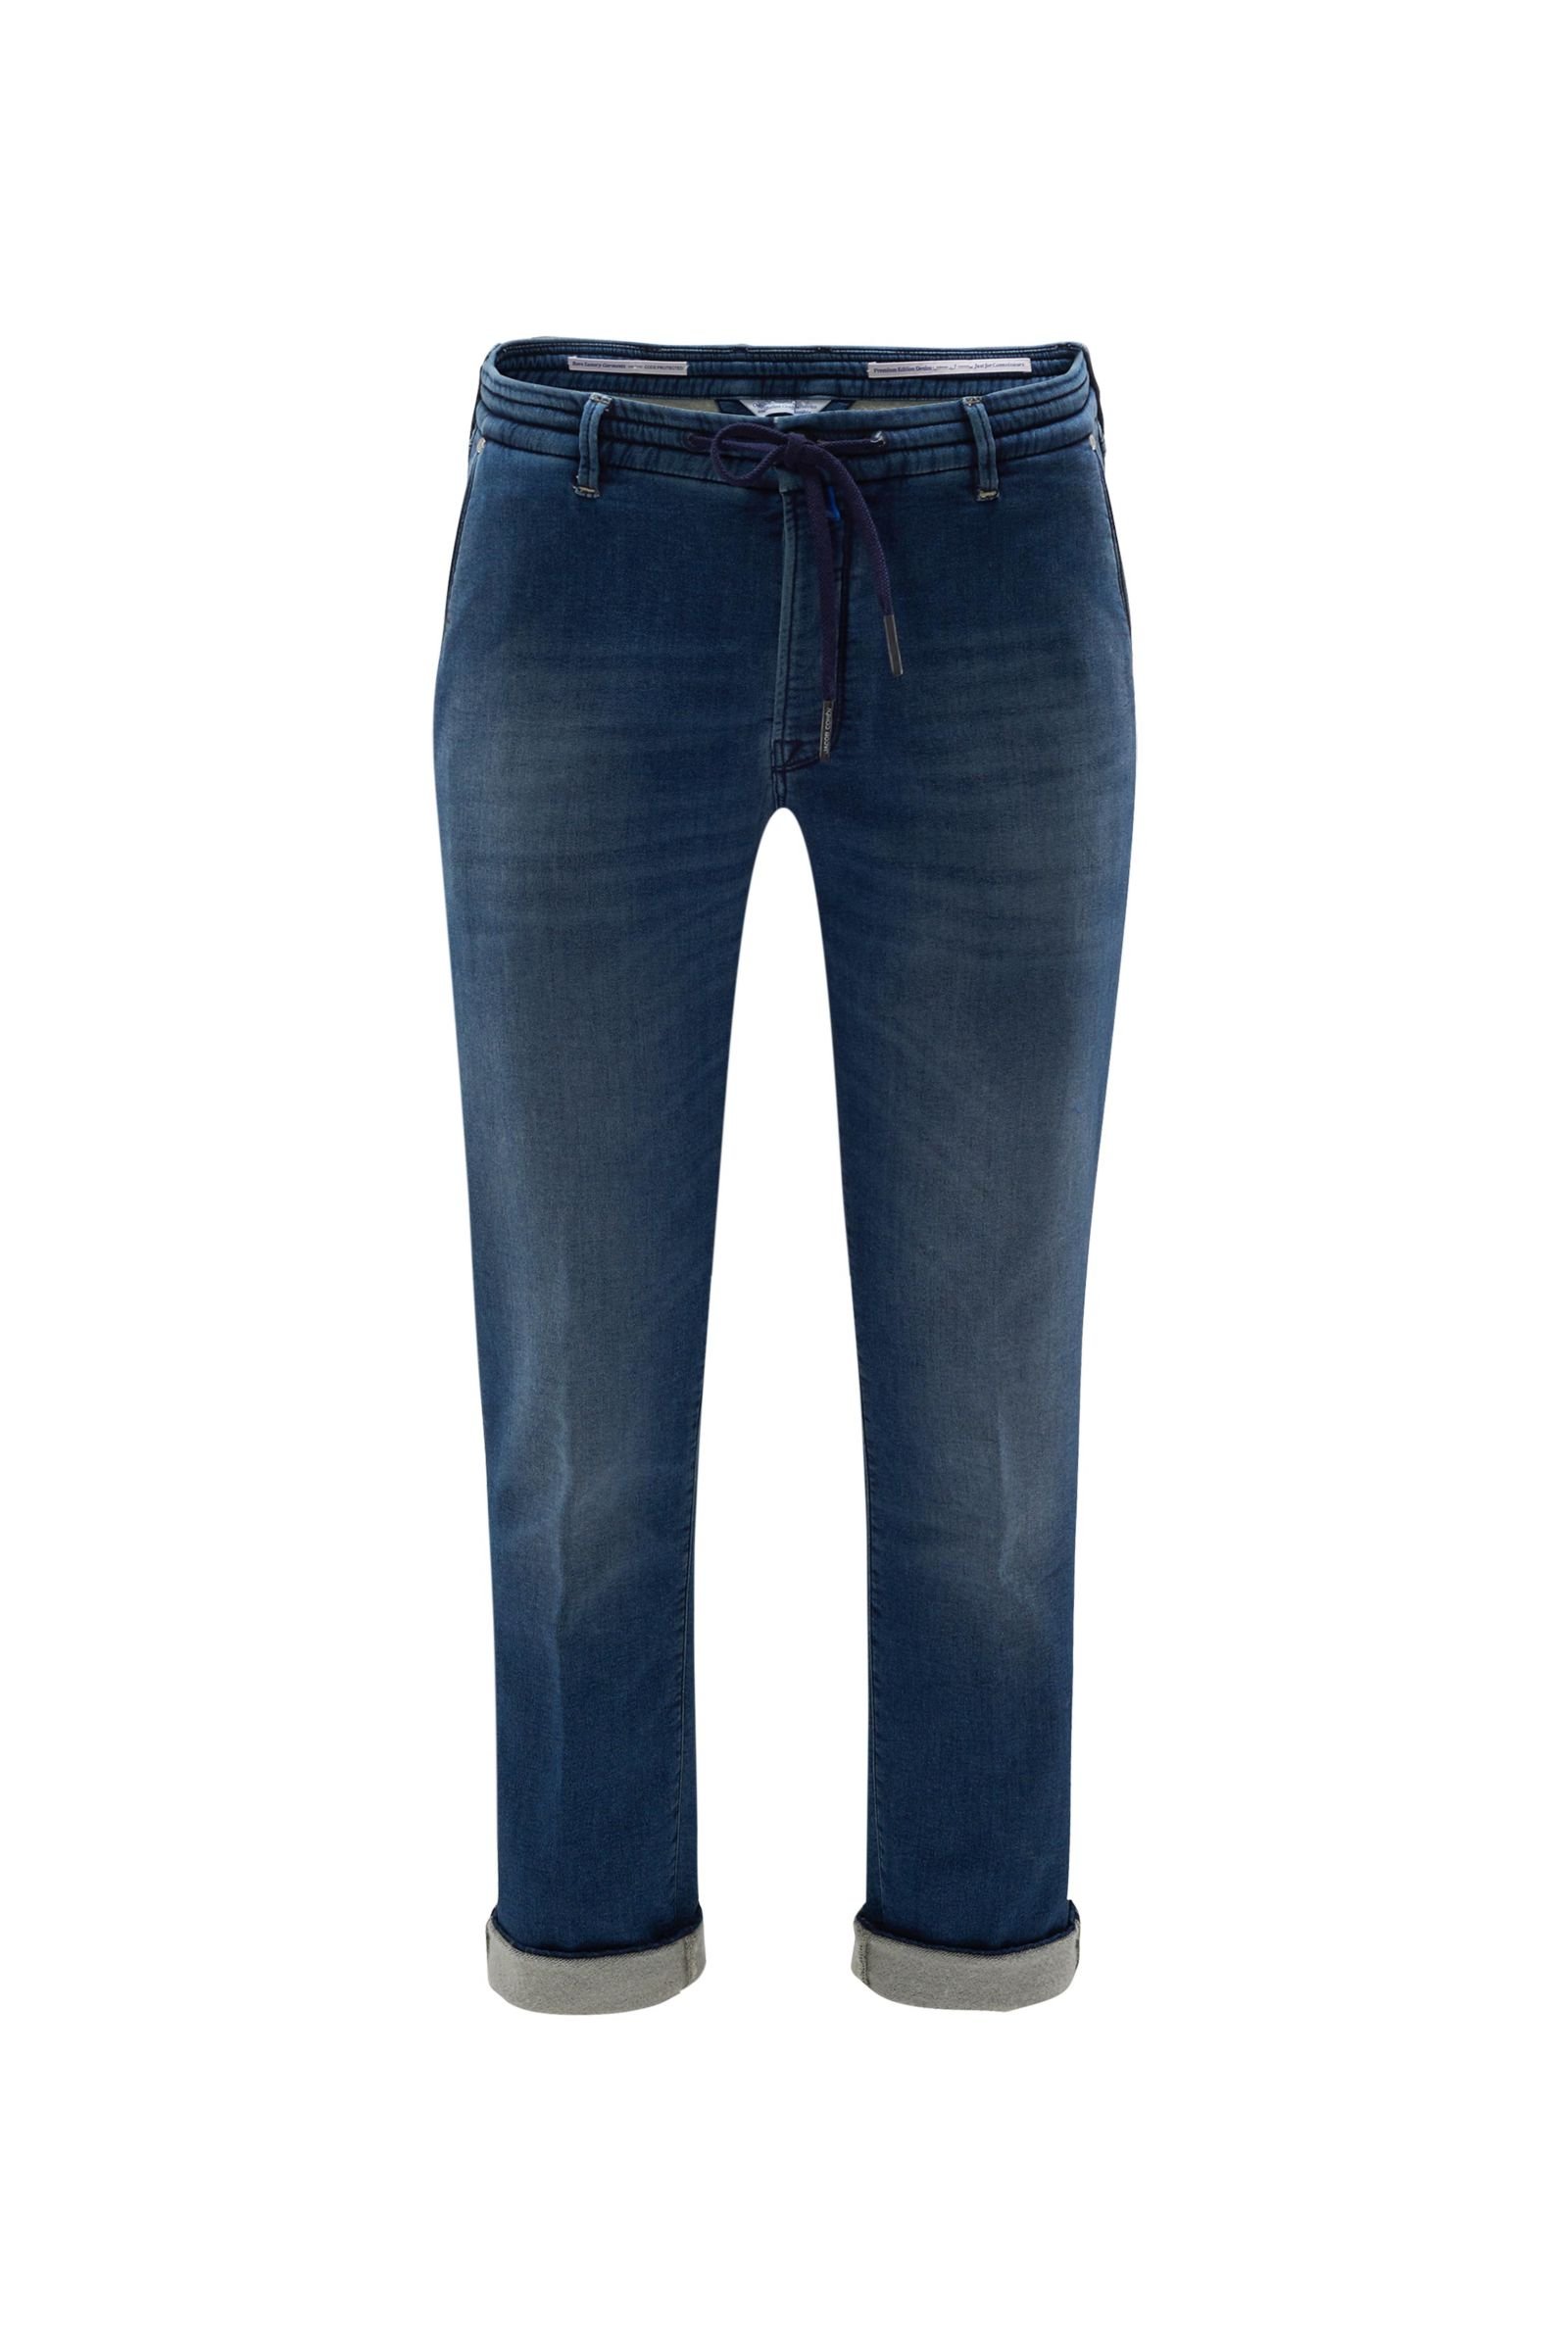 Jeans-Joggpants 'J676 Relax Comfort Slim Fit' rauchblau